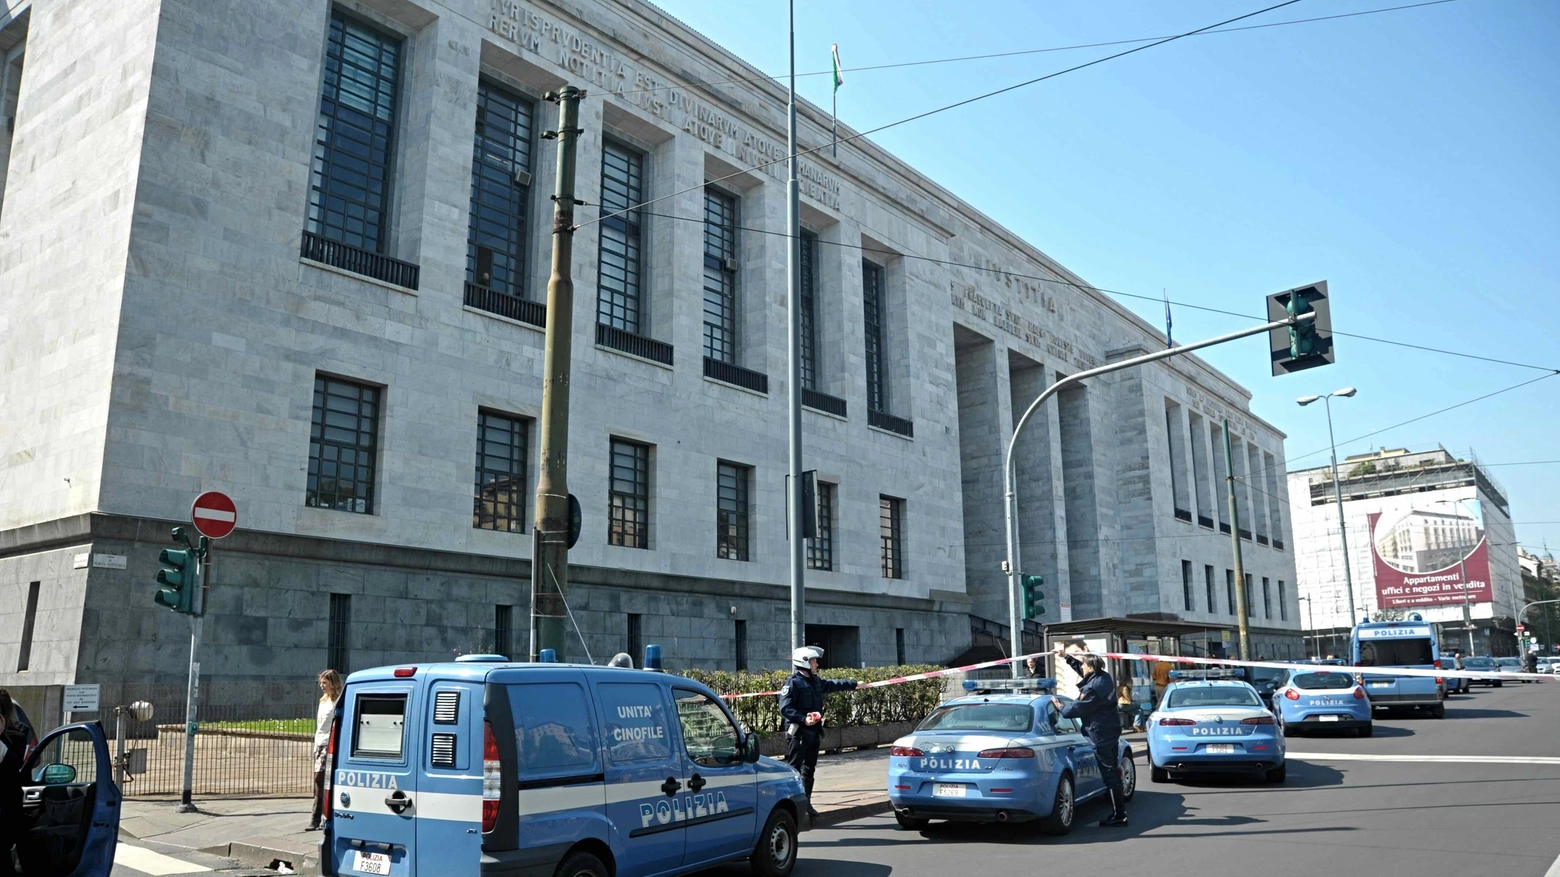 Tribunale di Milano